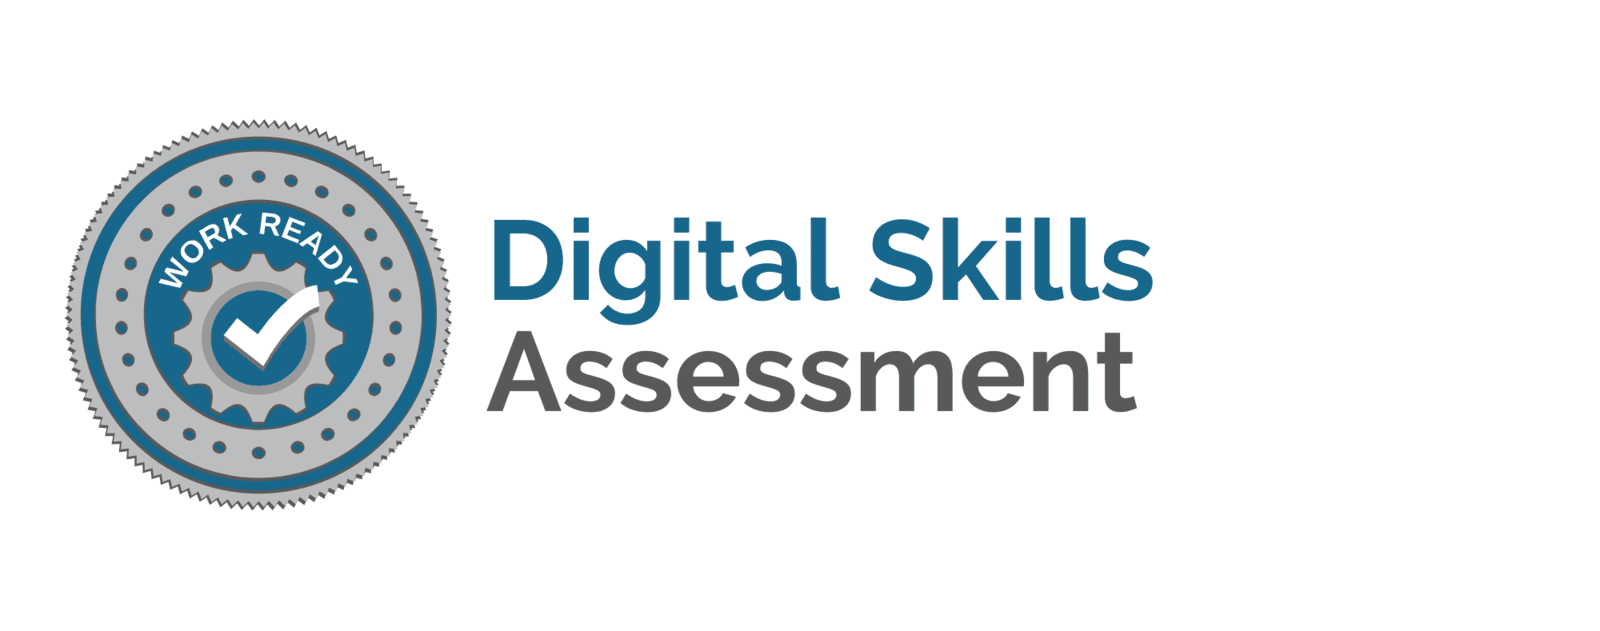 Digital Skills Assessment